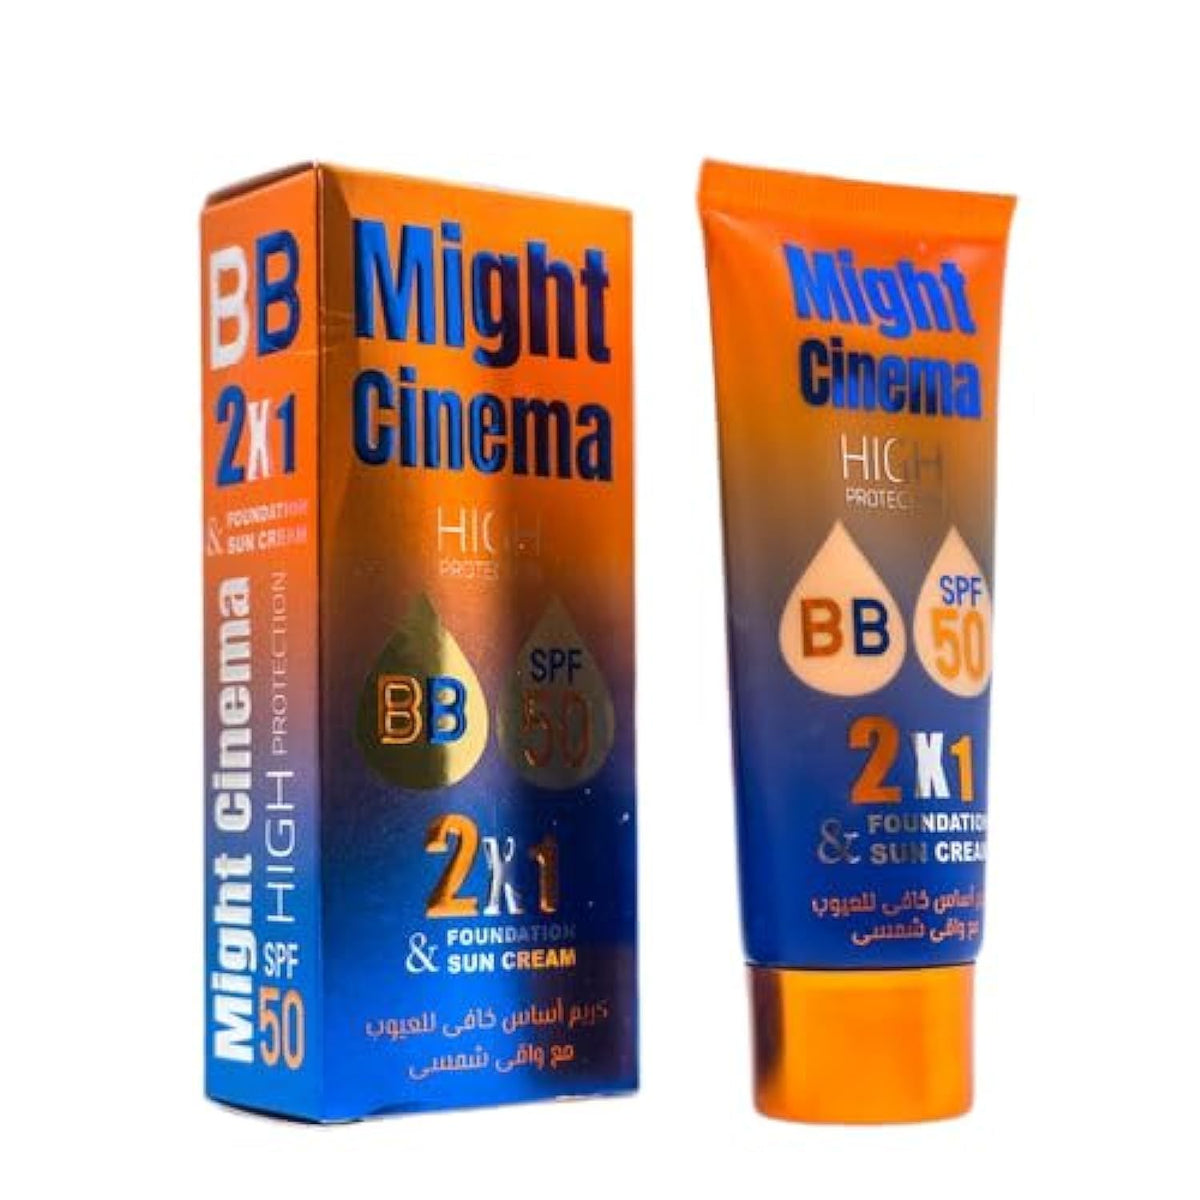 Might Cinema BB 50 SPF 2x1 Foundation & Sun Cream - 101